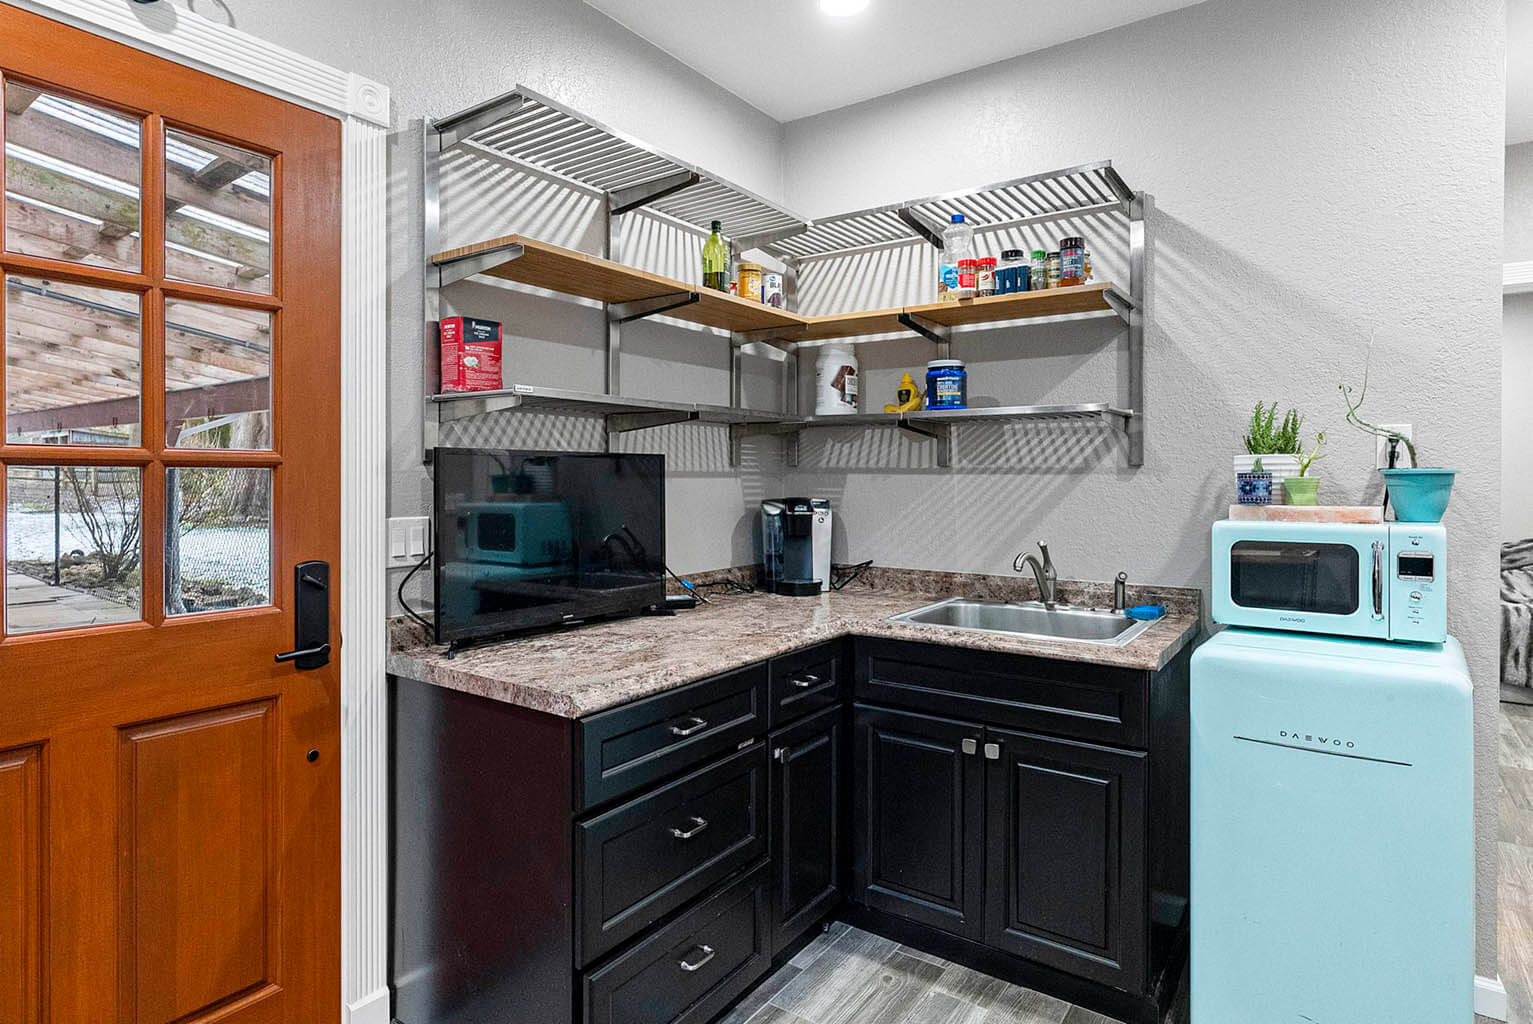 Guest apartment features a kitchenette